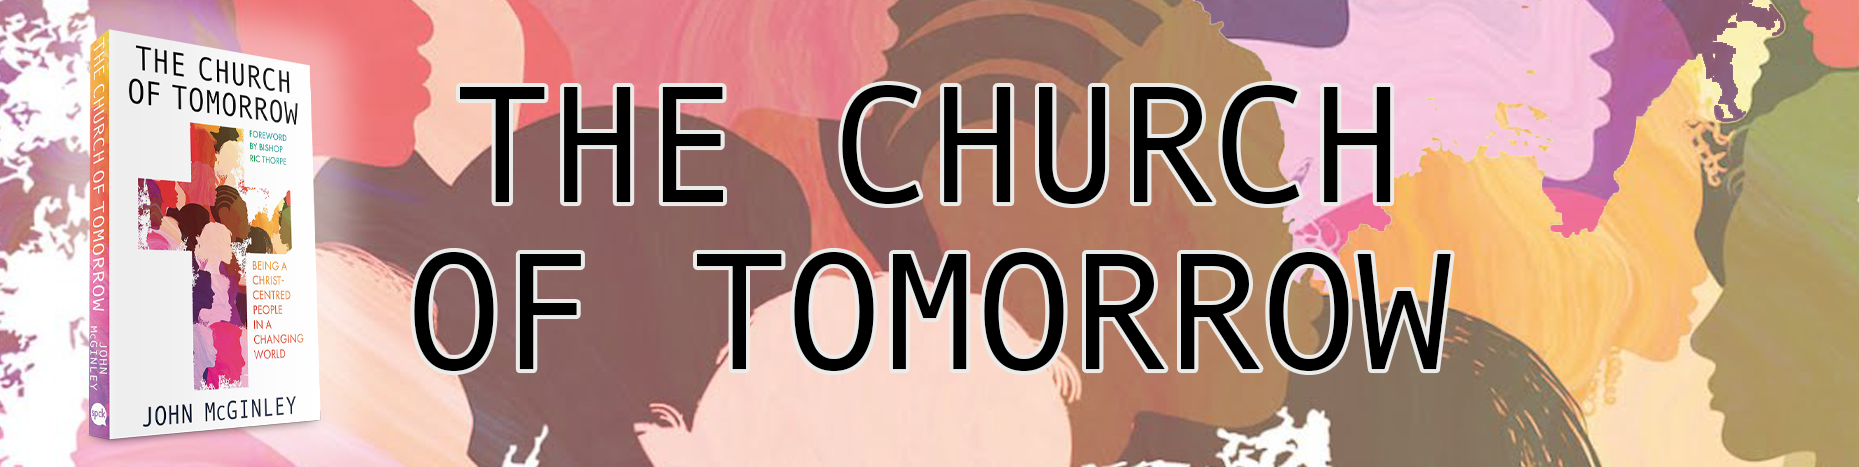 Church-of-tomorrow-header